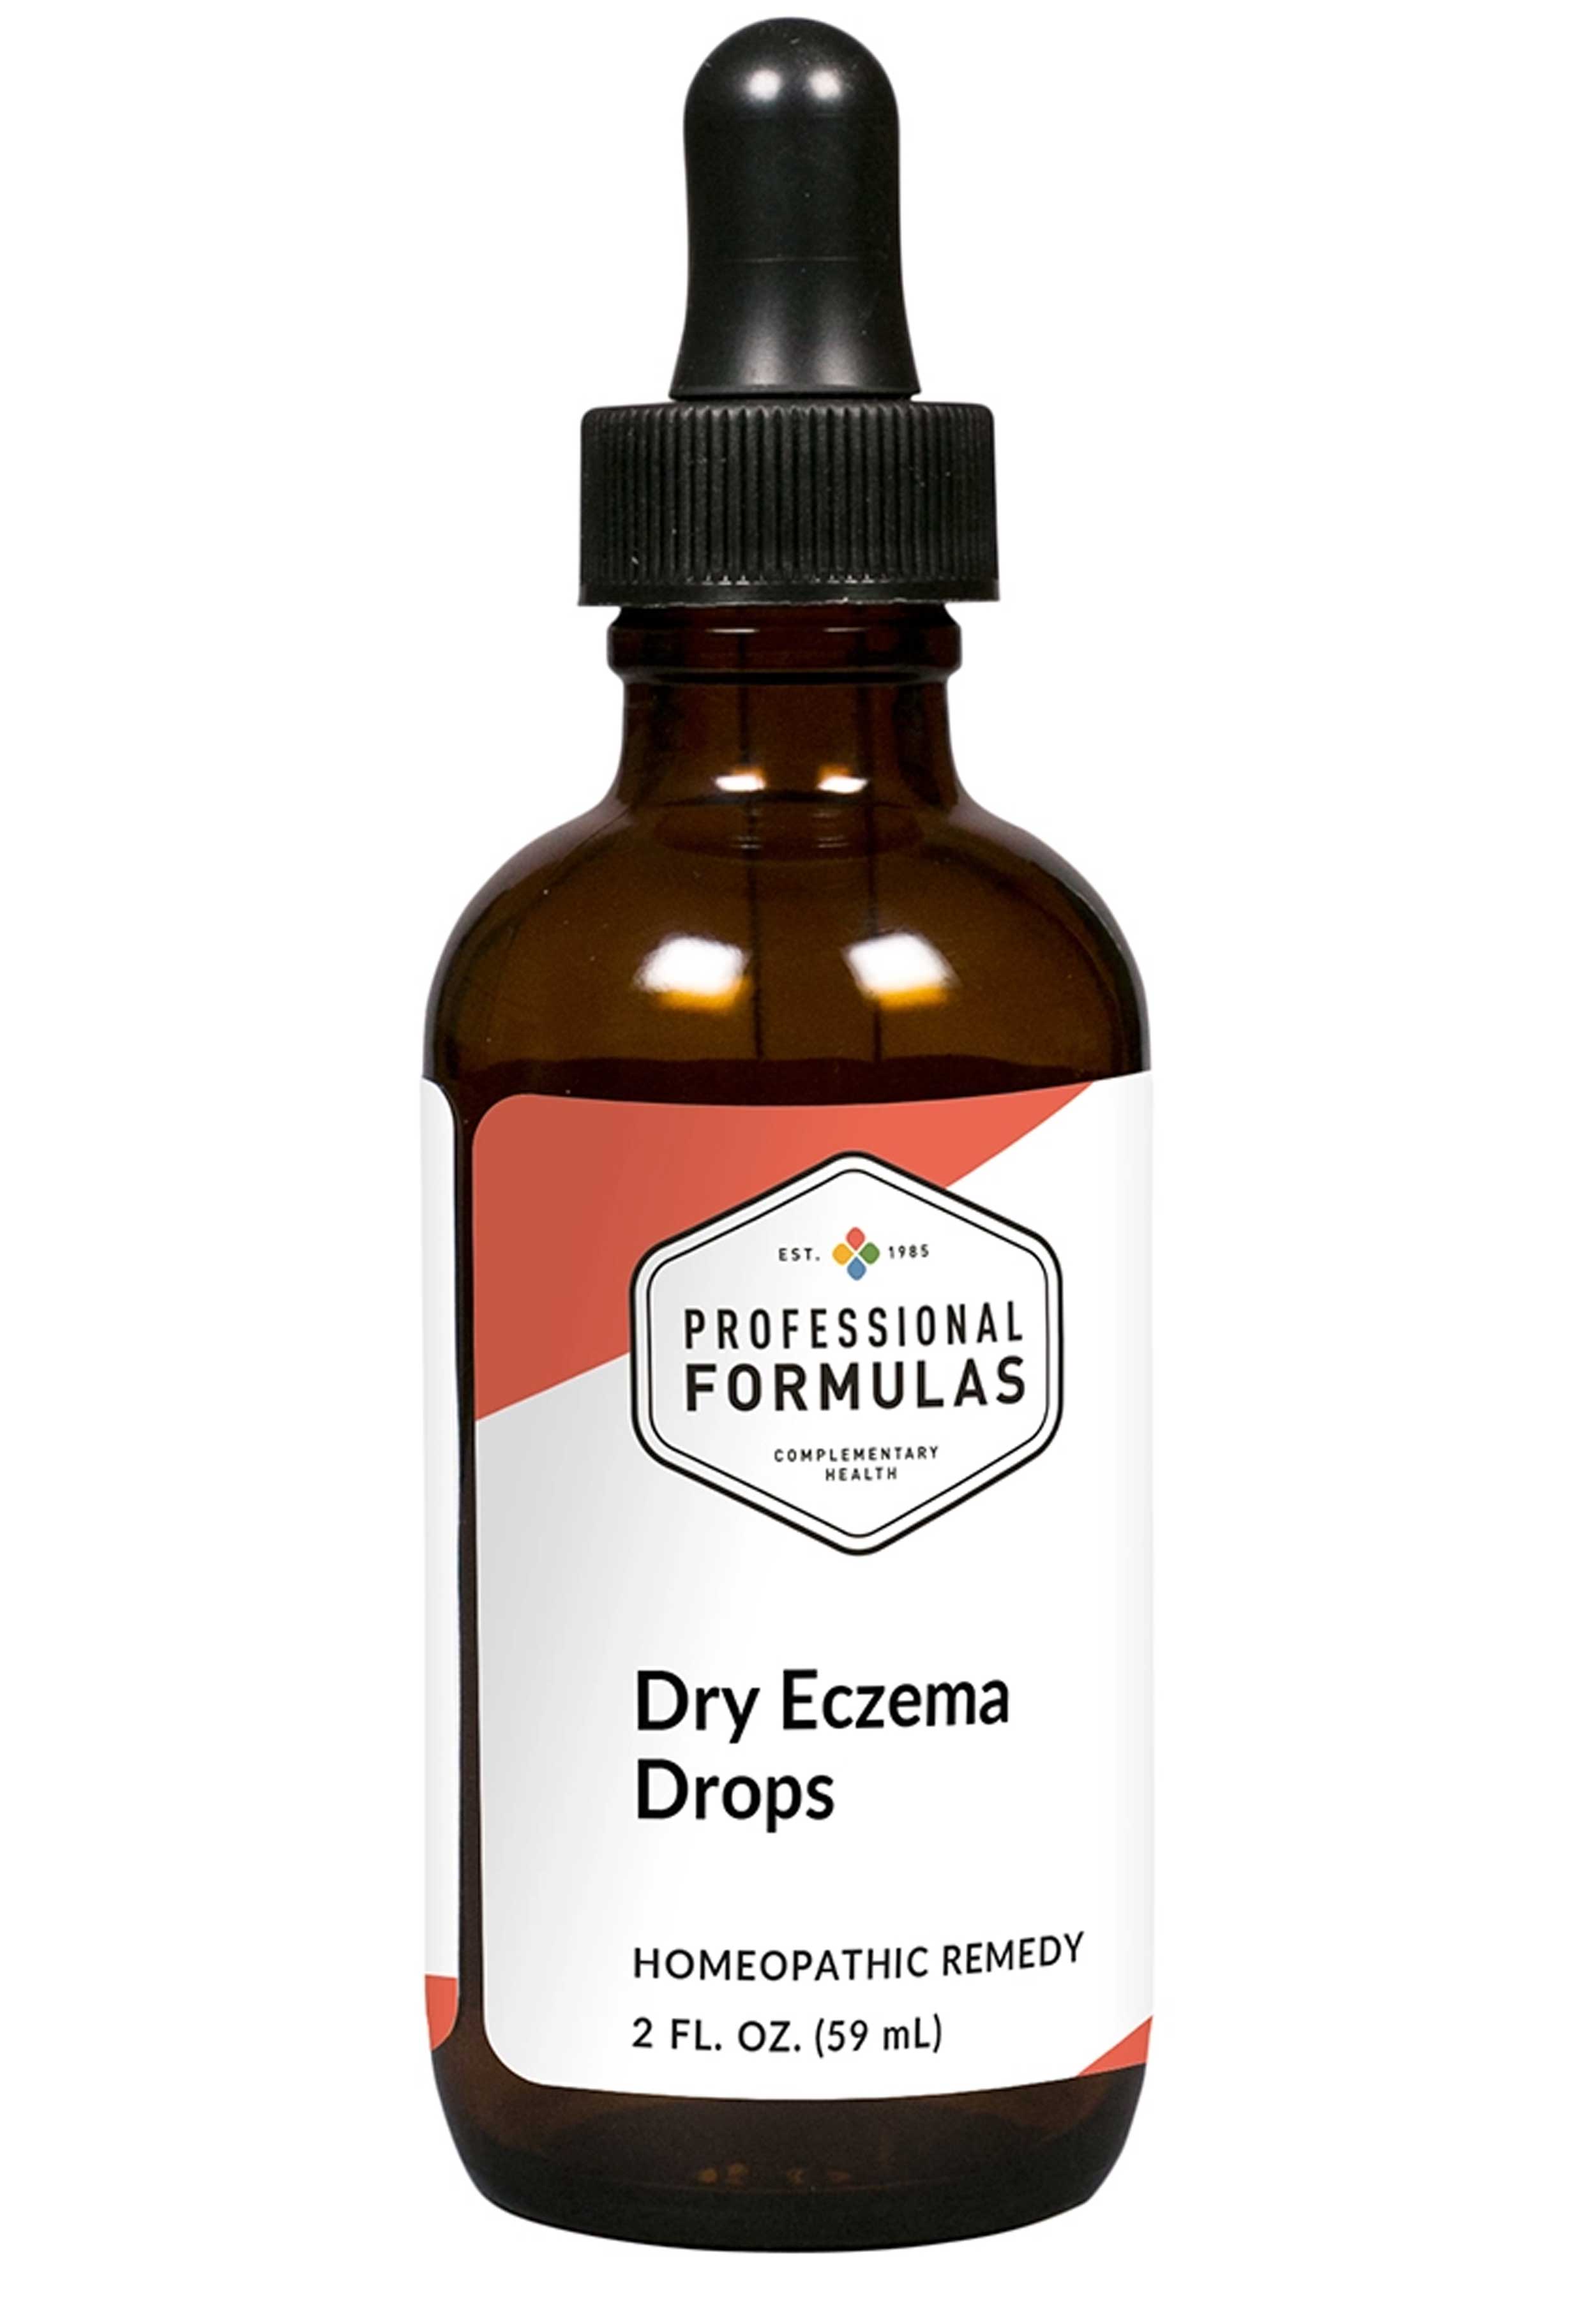 Professional Formulas Dry Eczema Drops